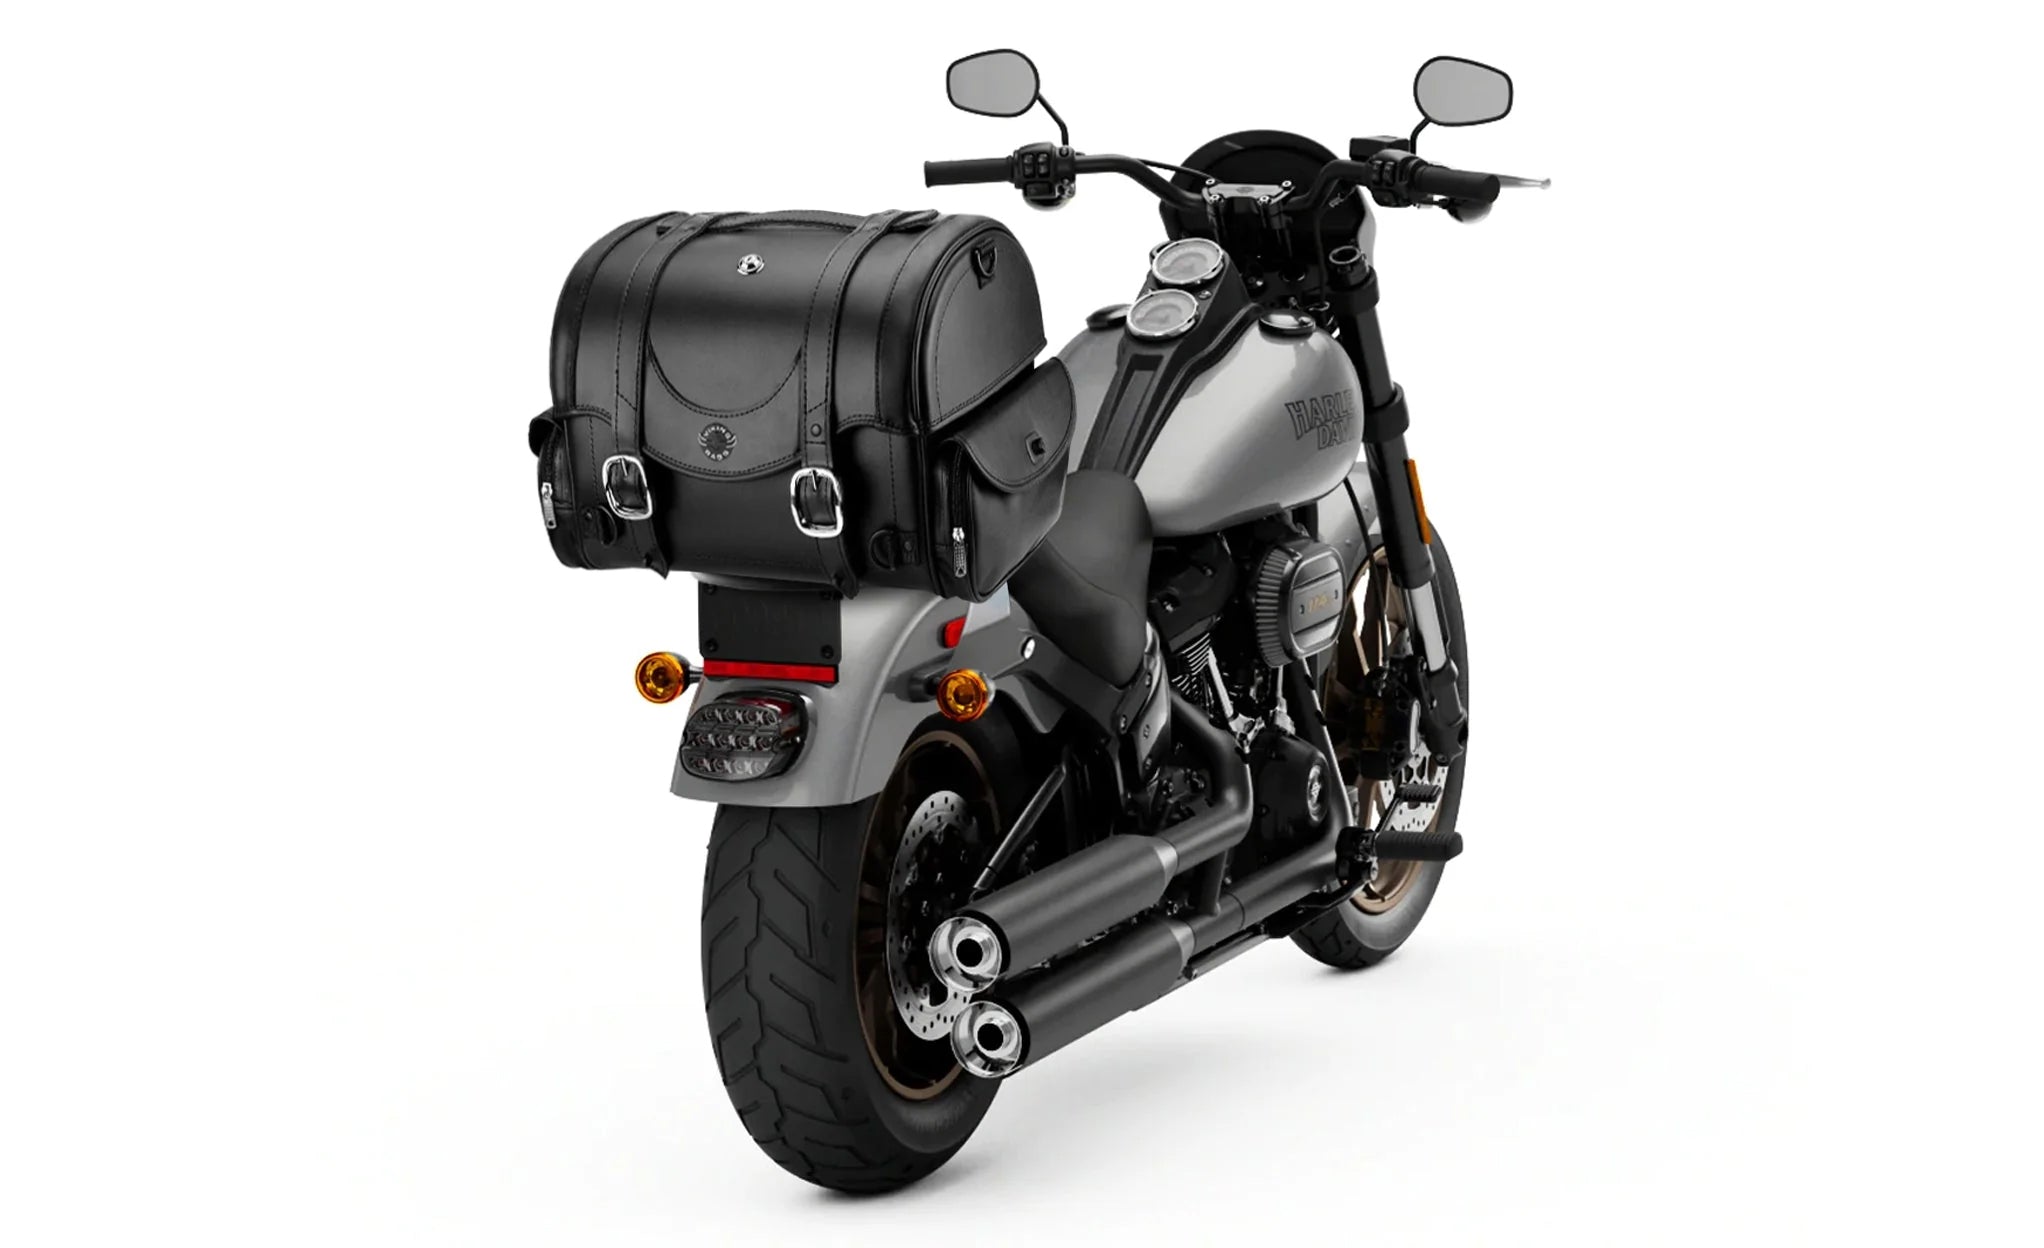 21L - Century Medium Leather Motorcycle Sissy Bar Bag for Harley Davidson on Bike Photo @expand